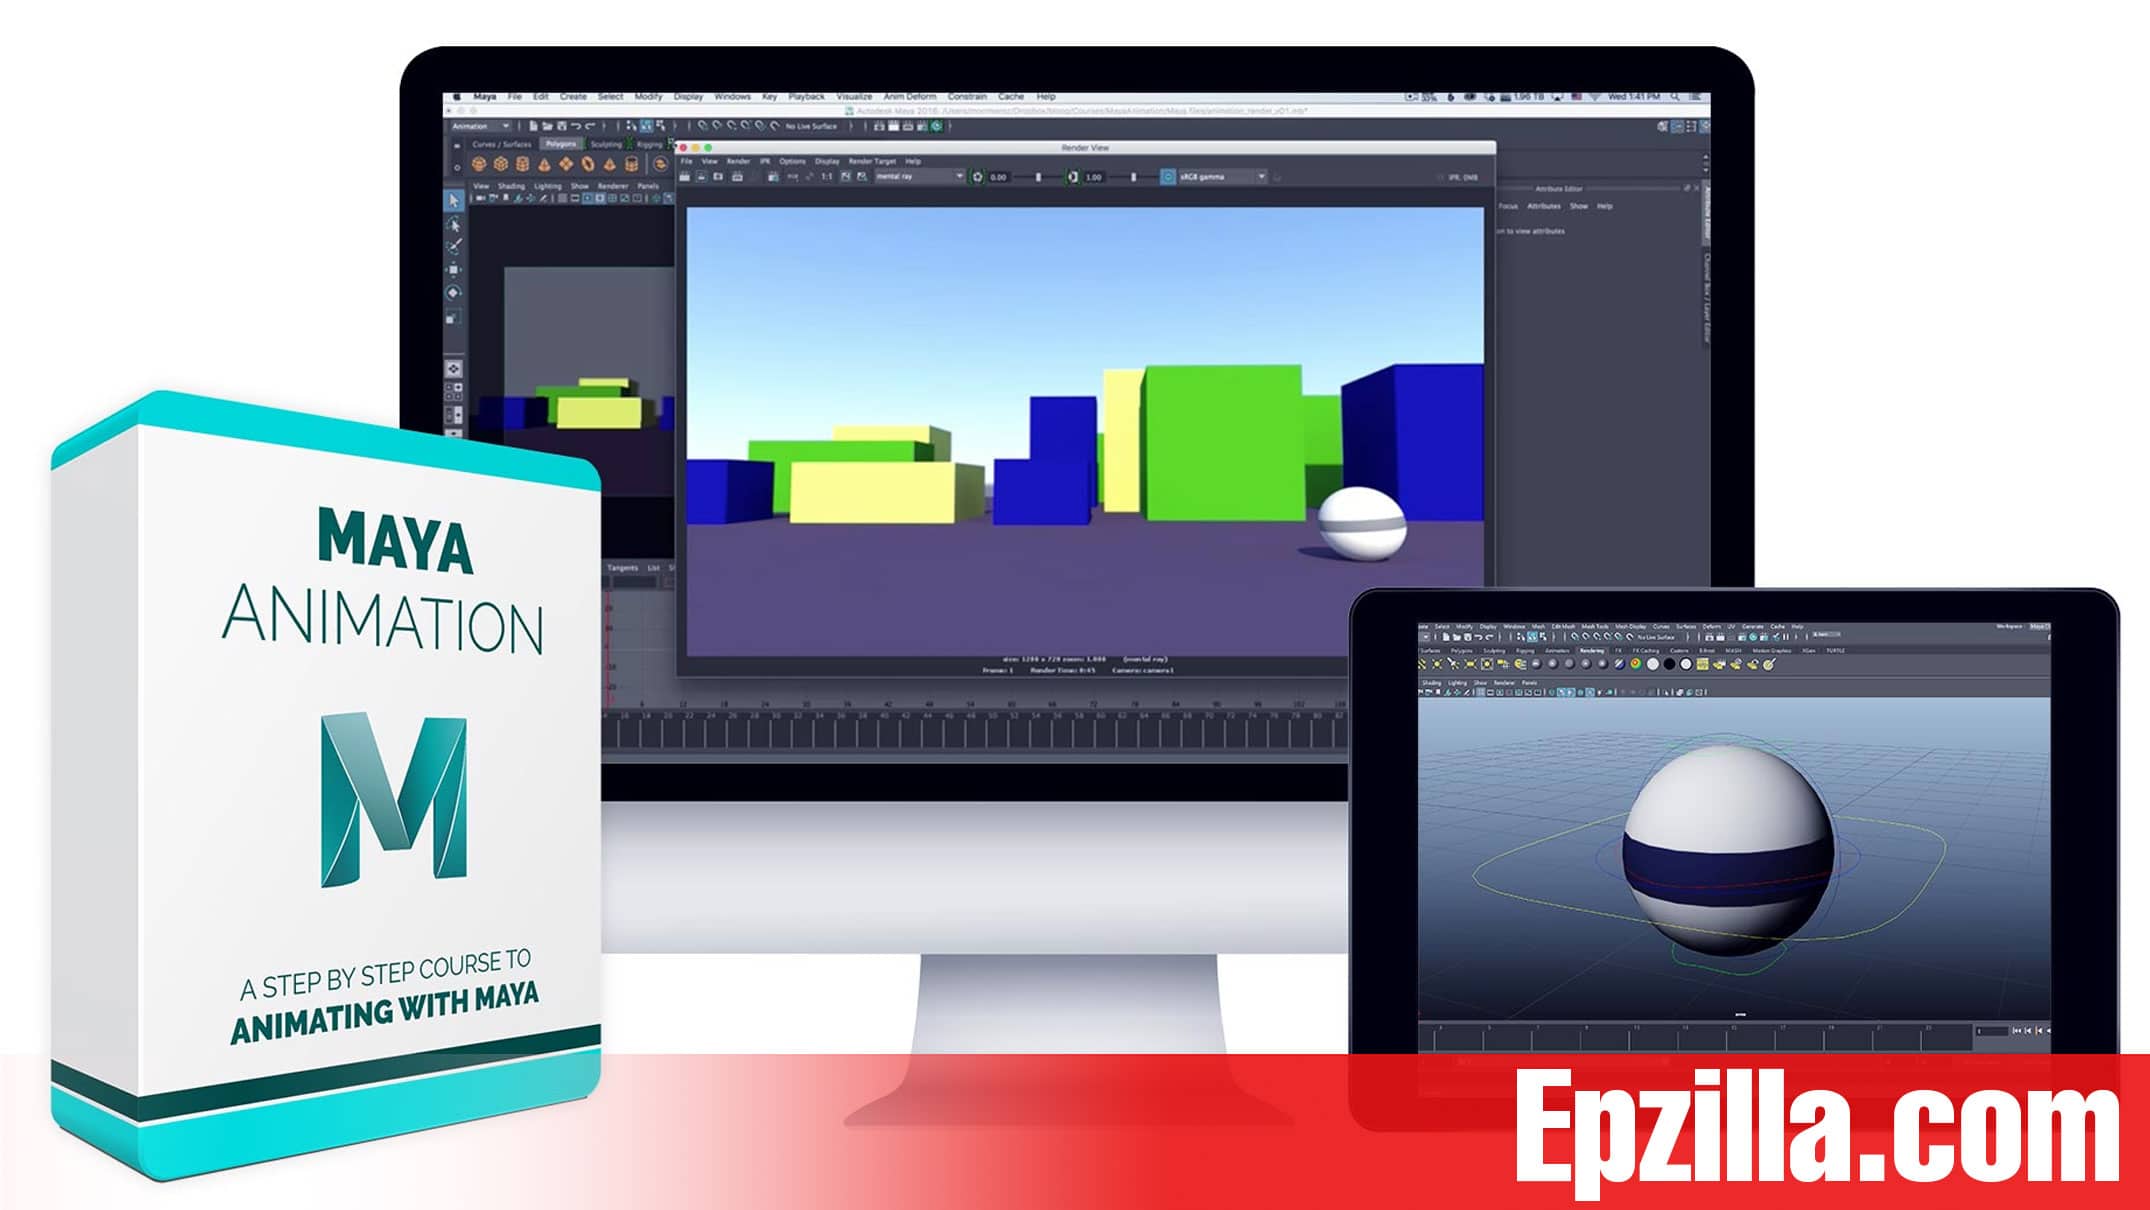 Bloop Animations Maya Animation Free Download Epzilla.com